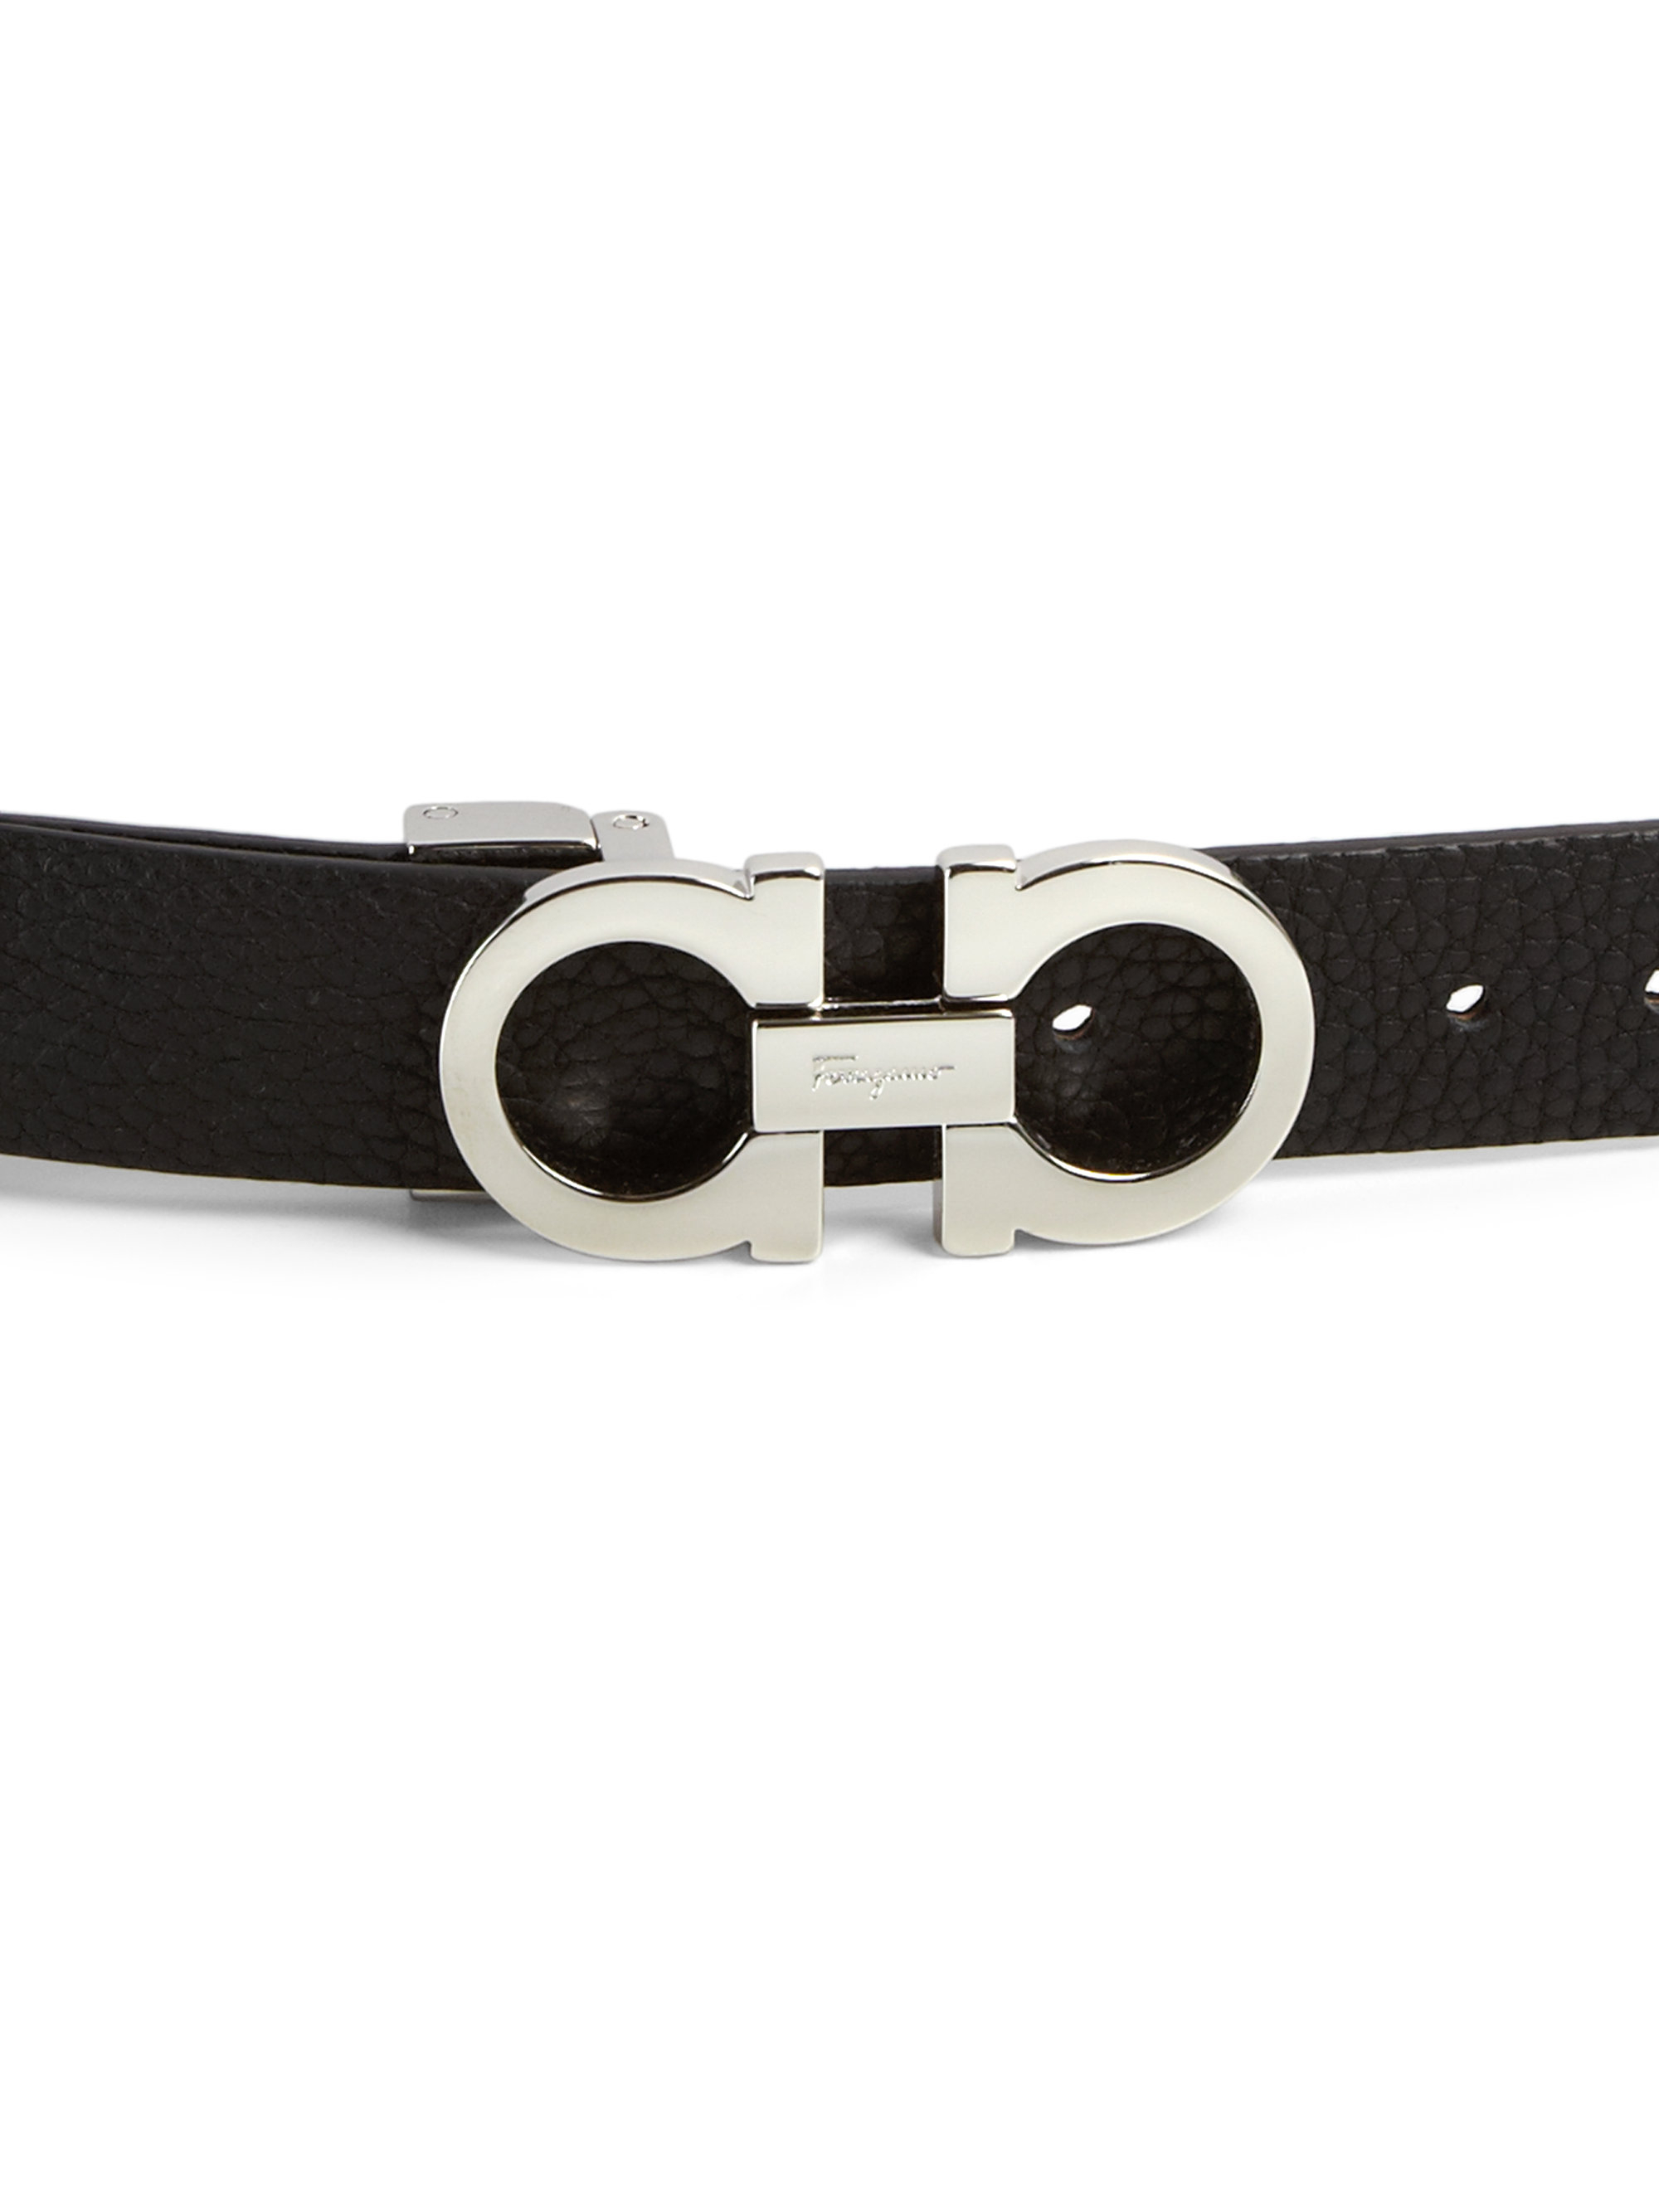 Lyst - Ferragamo Gancini Small Leather Belt in Black